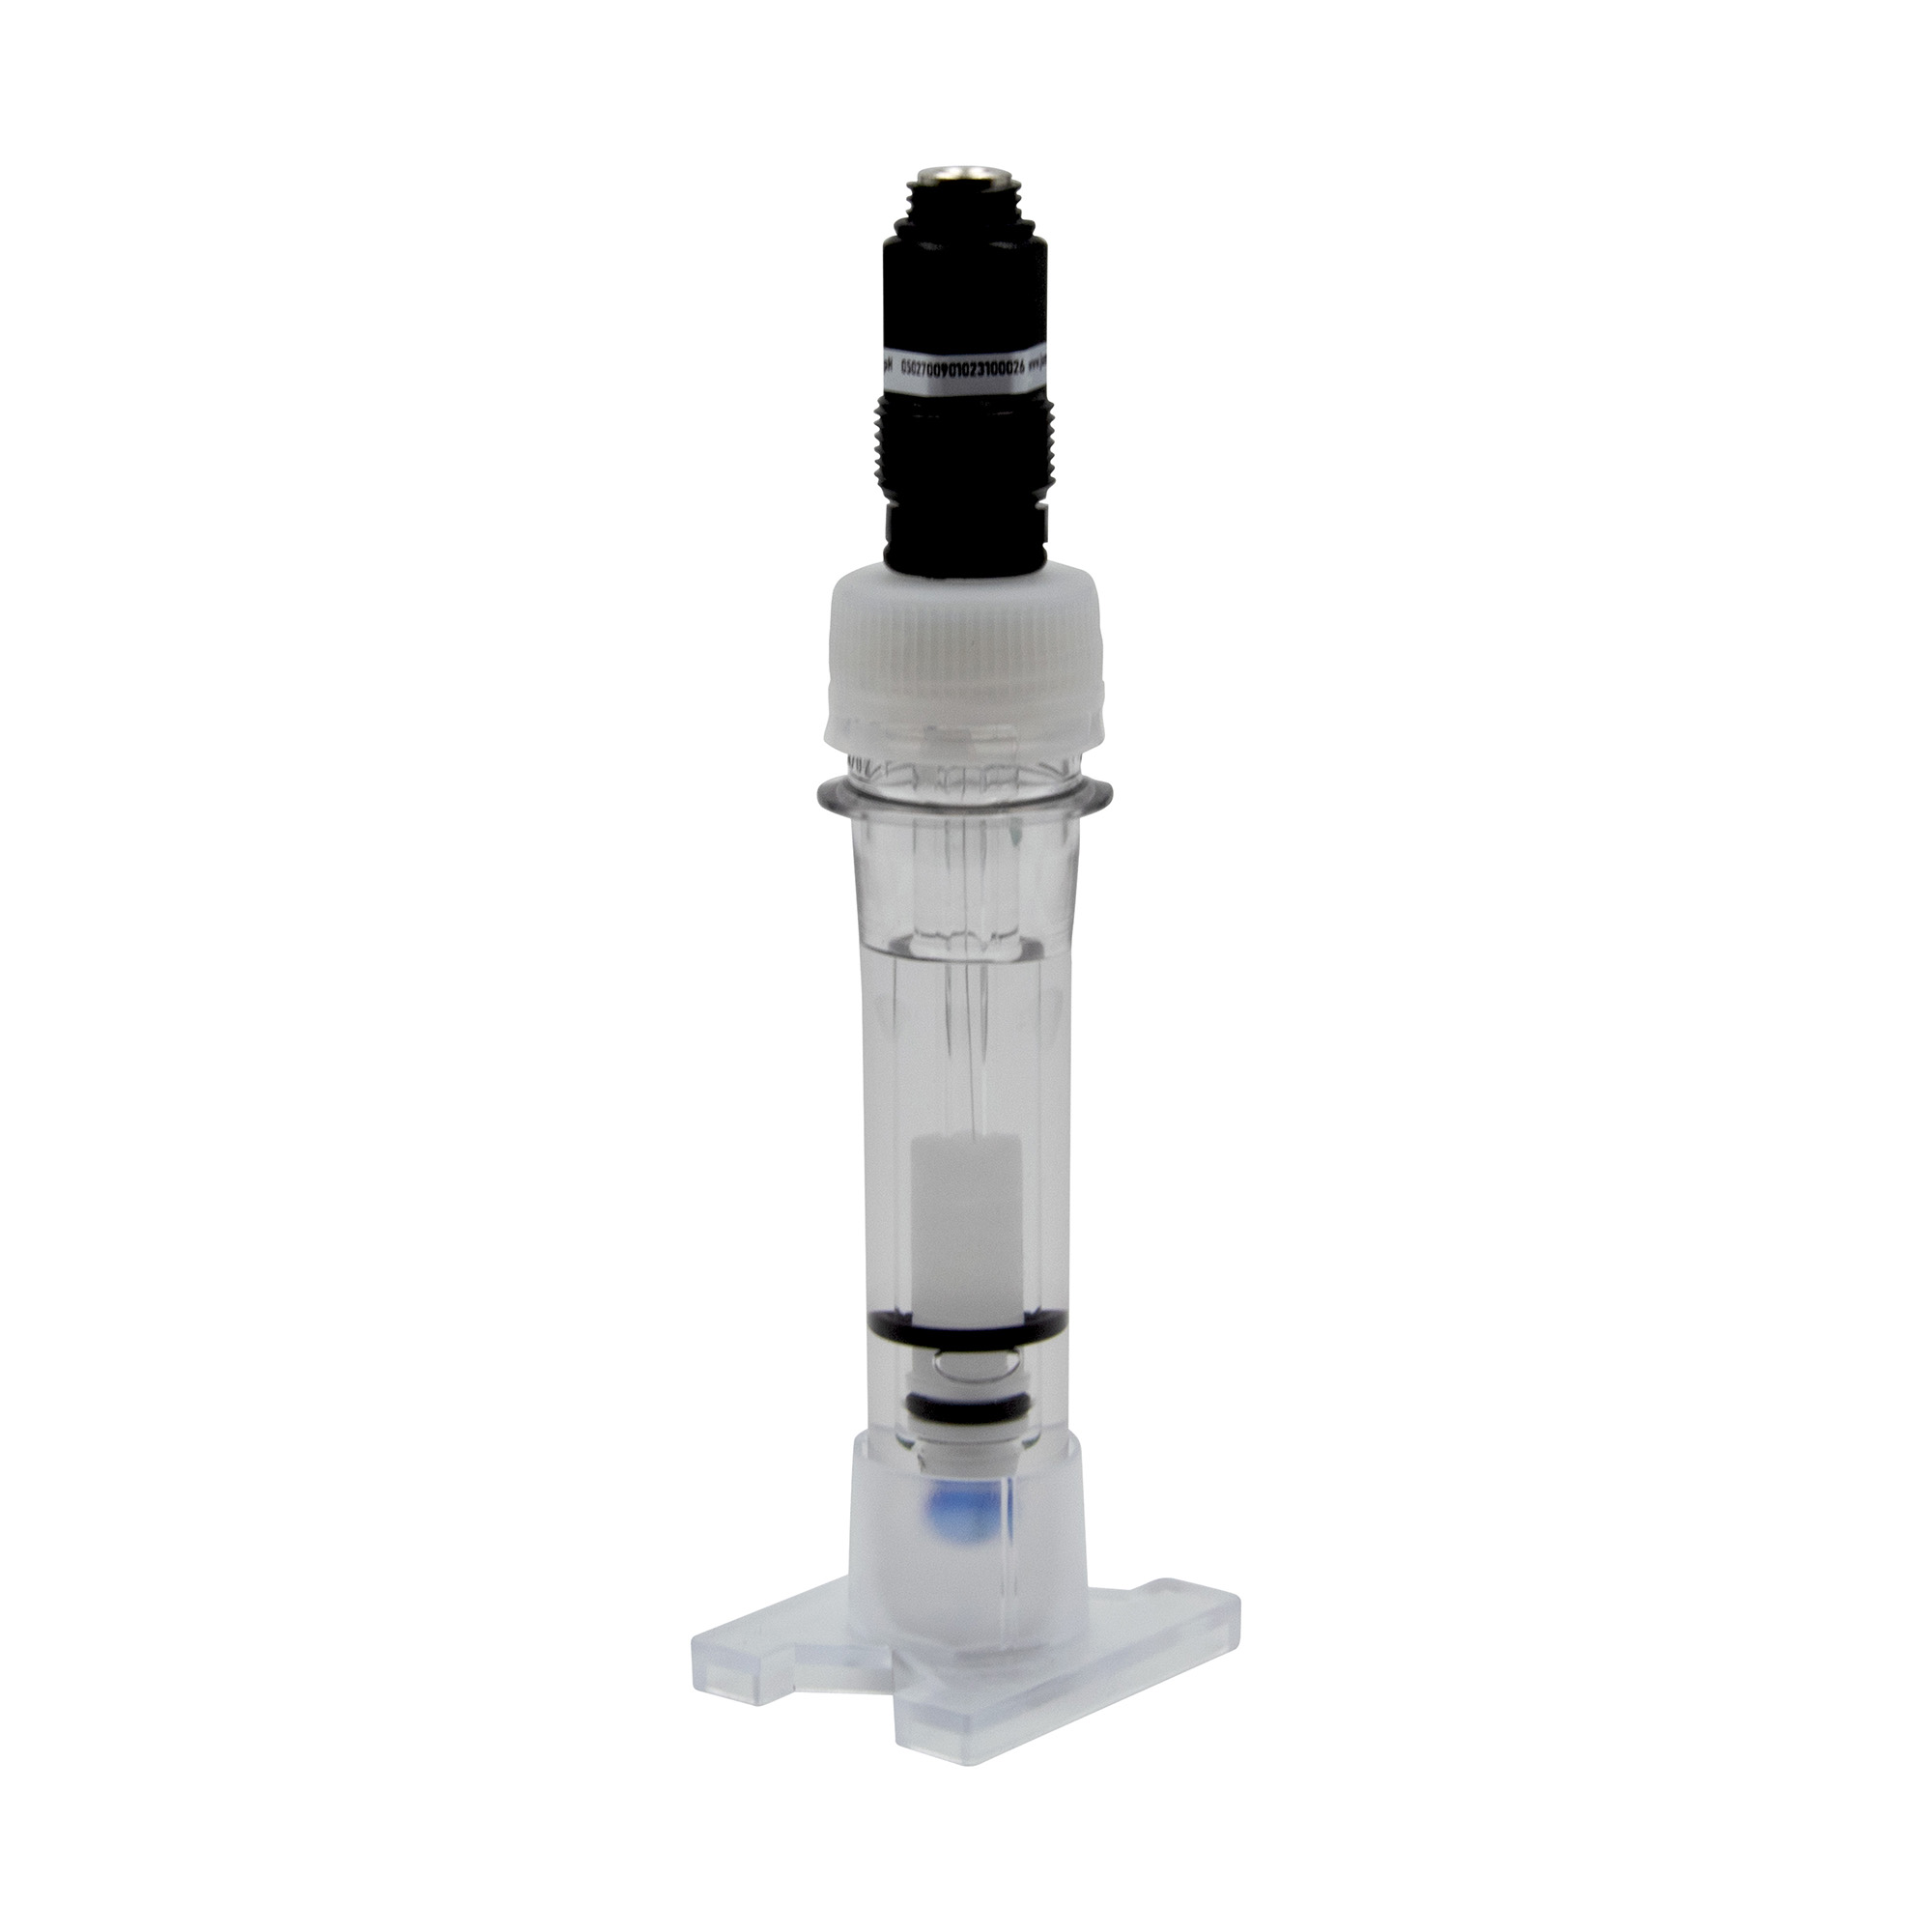 JUMO tecLine pH electrode with salt reserve (UW glass, PTFE ring diaphragm, S8 screw head Pg13.5, 120mm)